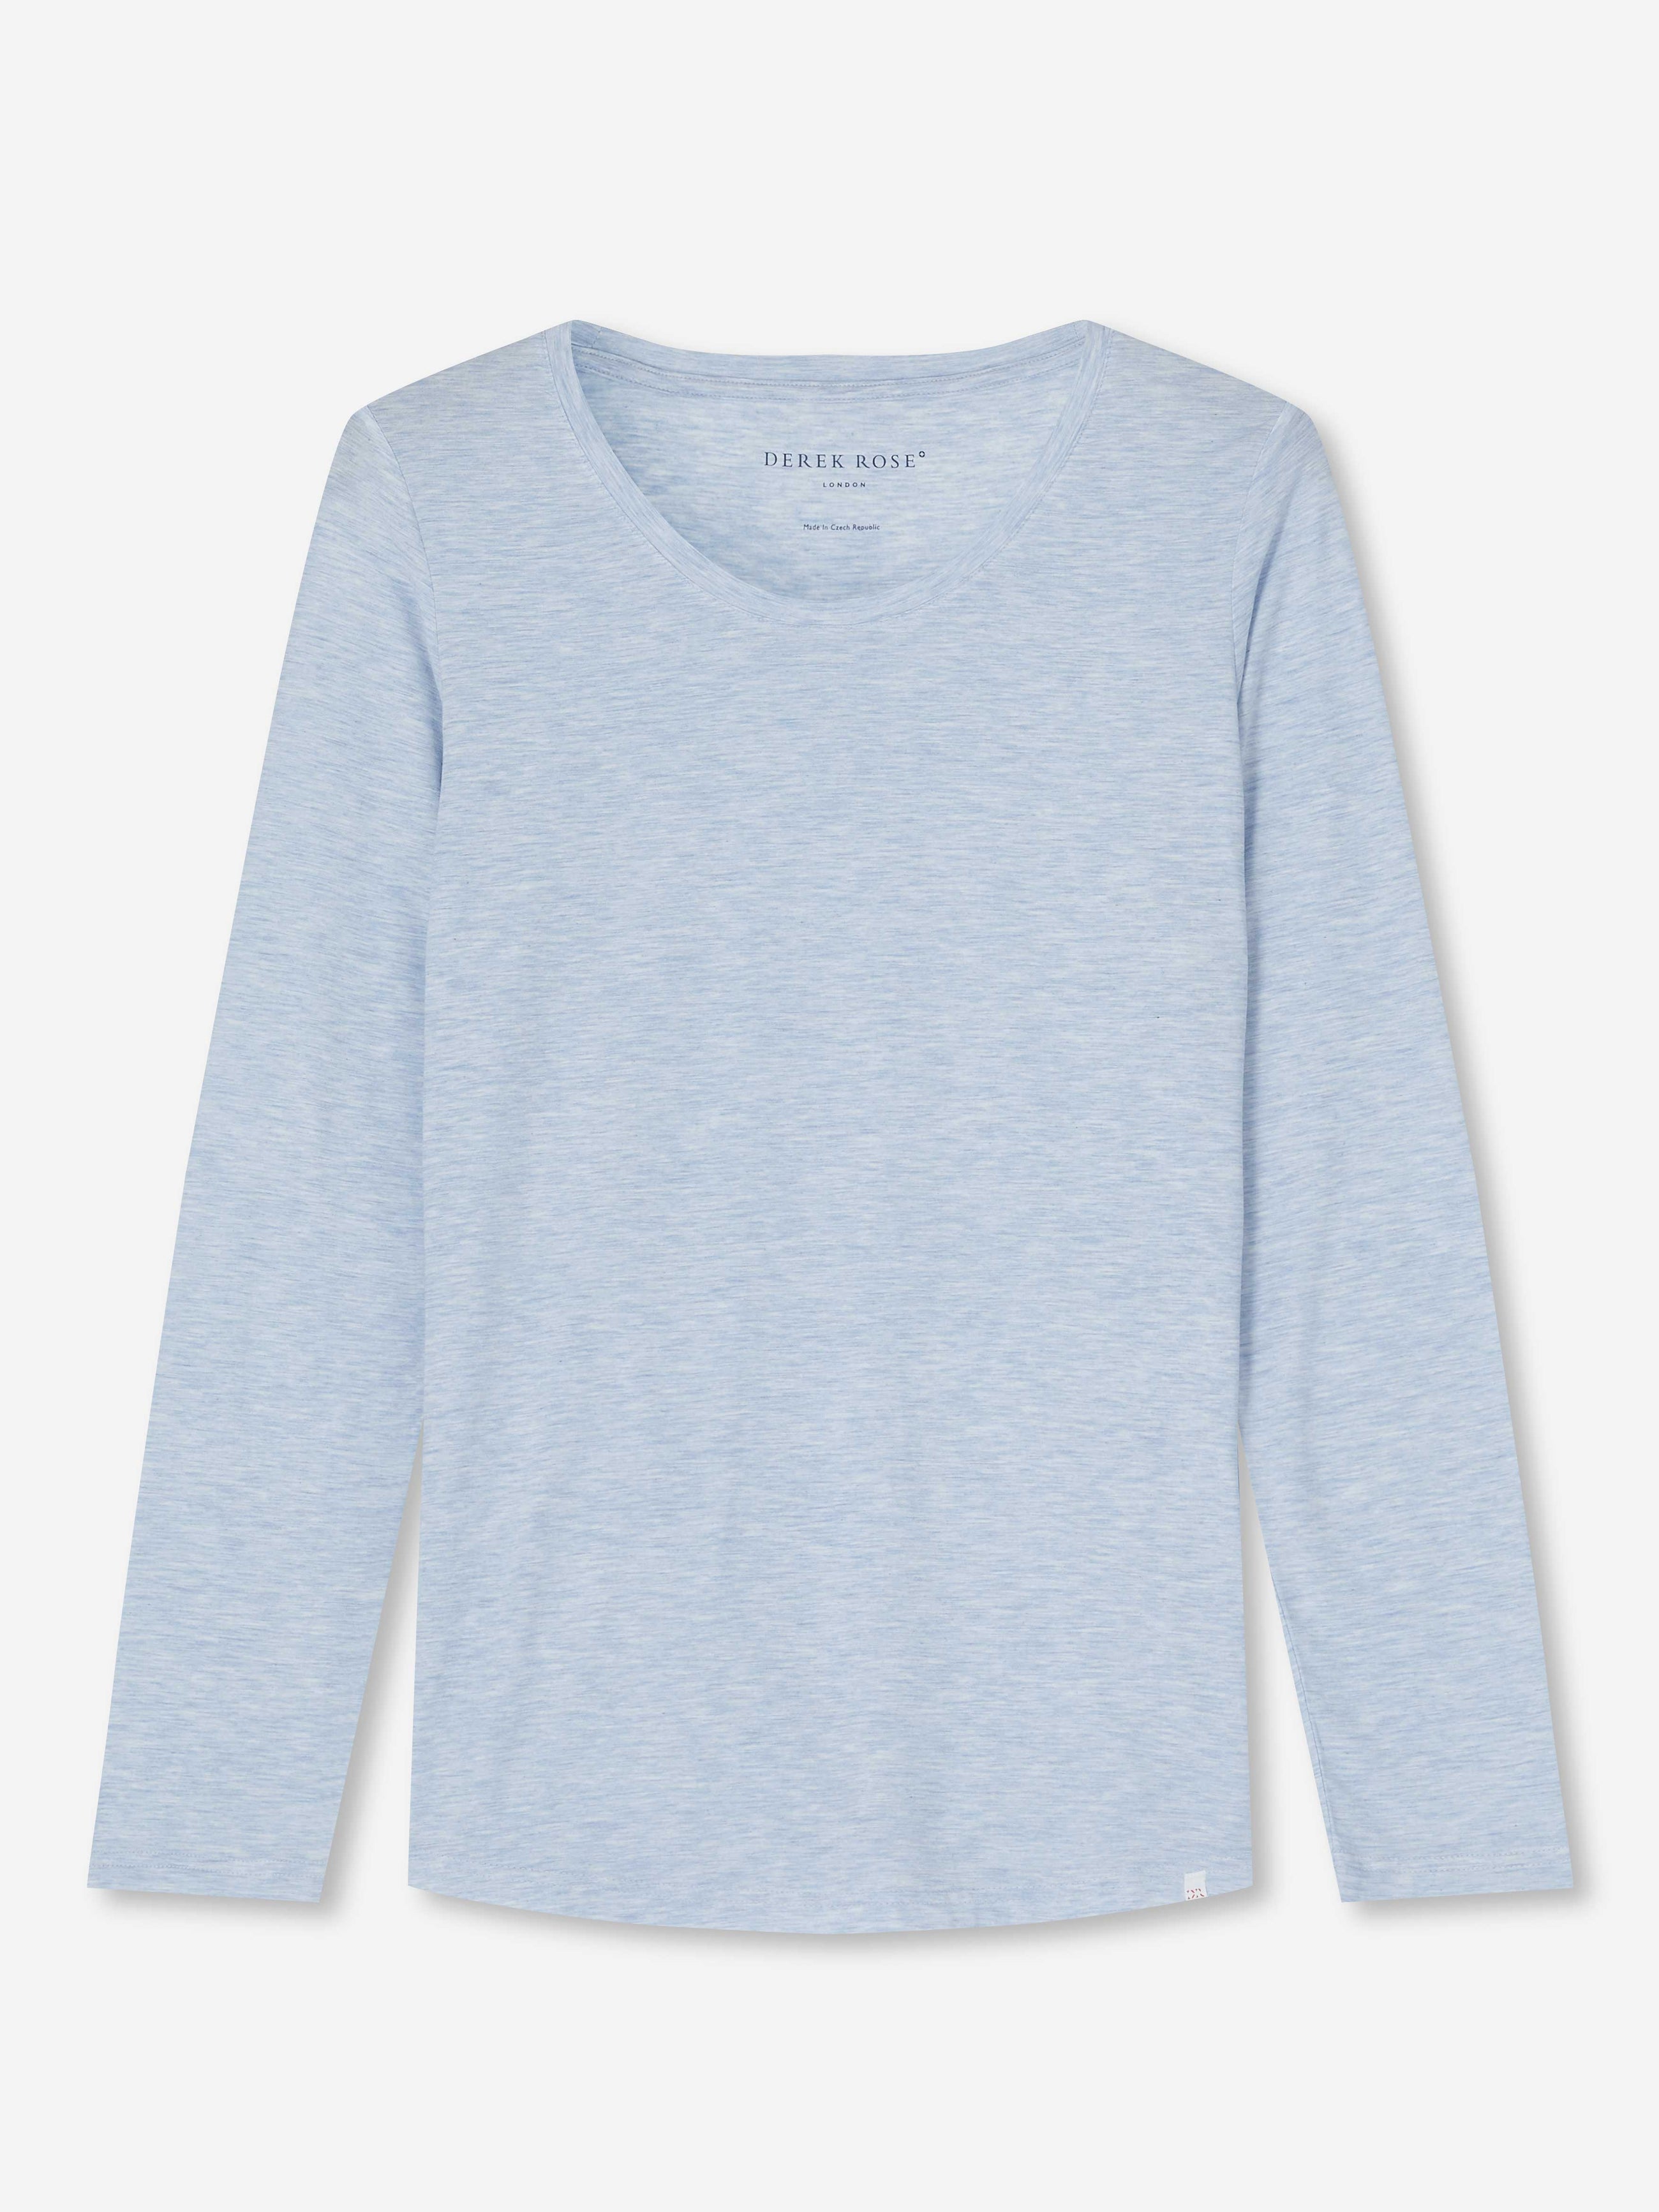 Women's Long Sleeve T-Shirt Ethan Micro Modal Stretch Blue Heather